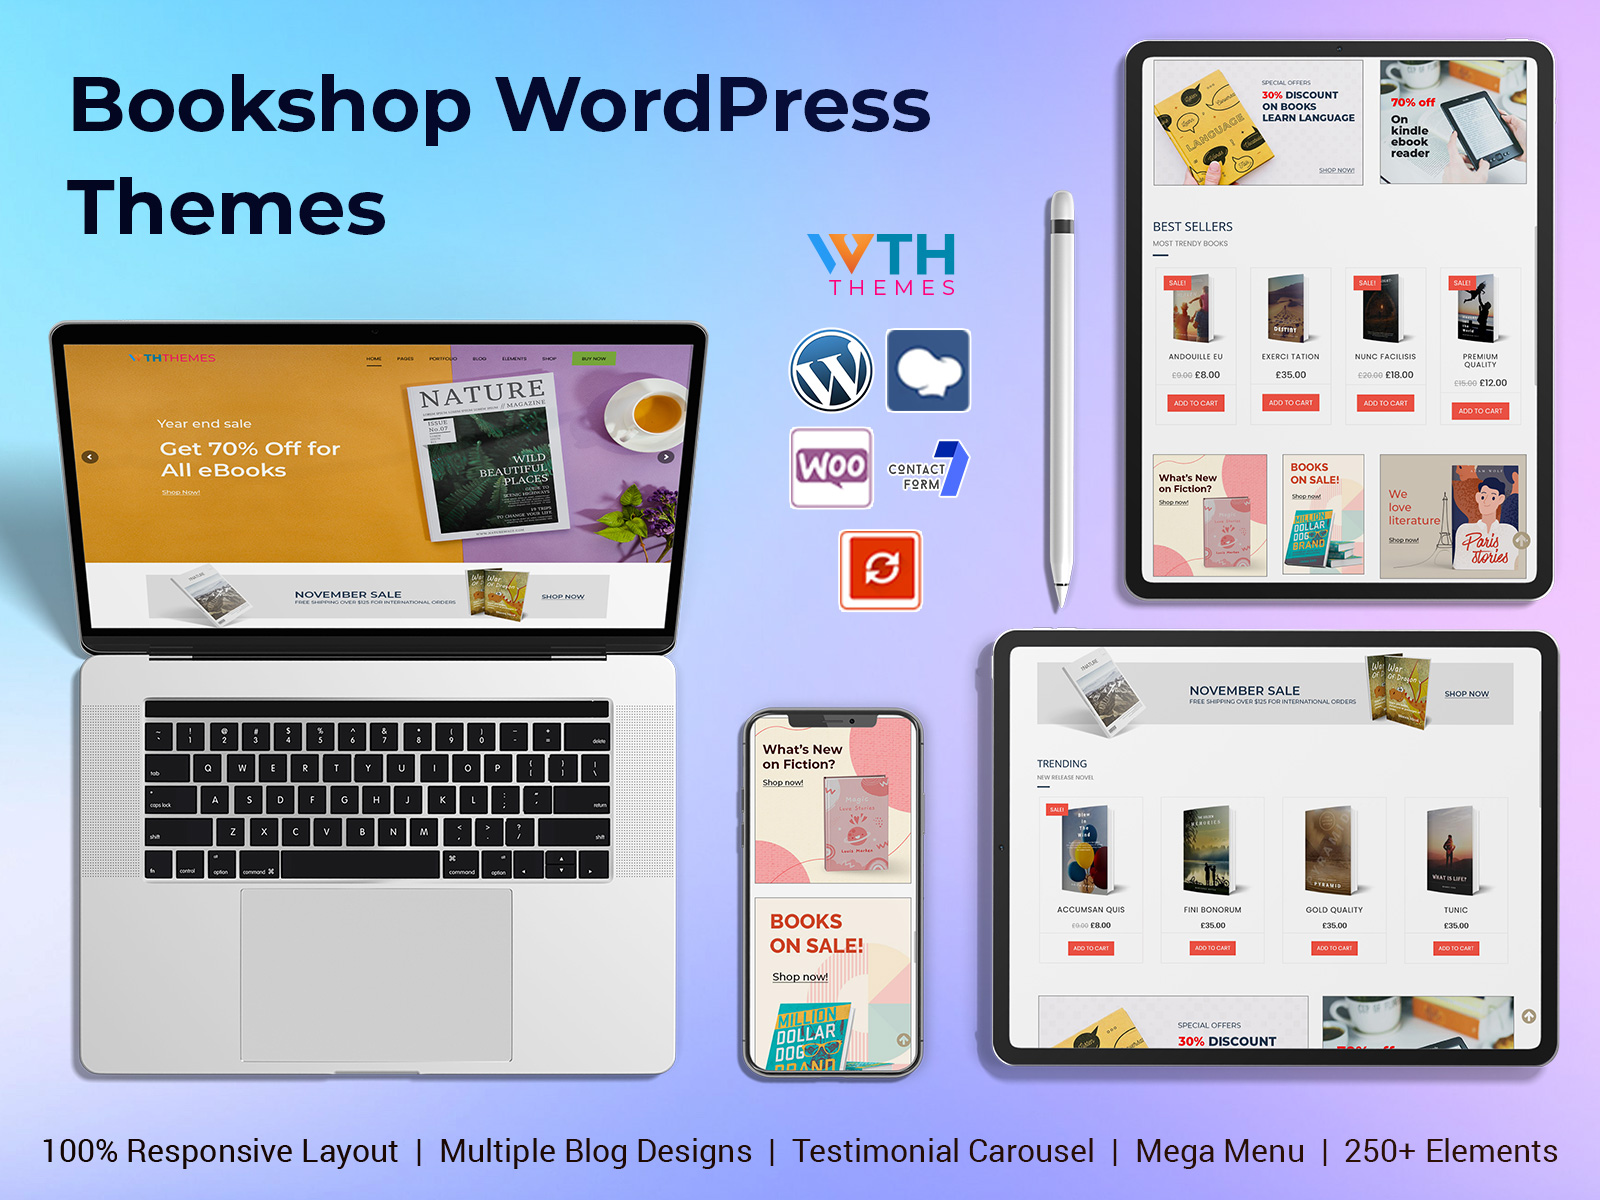 Bookshop WordPress Theme Will Help You Launch Your New Website